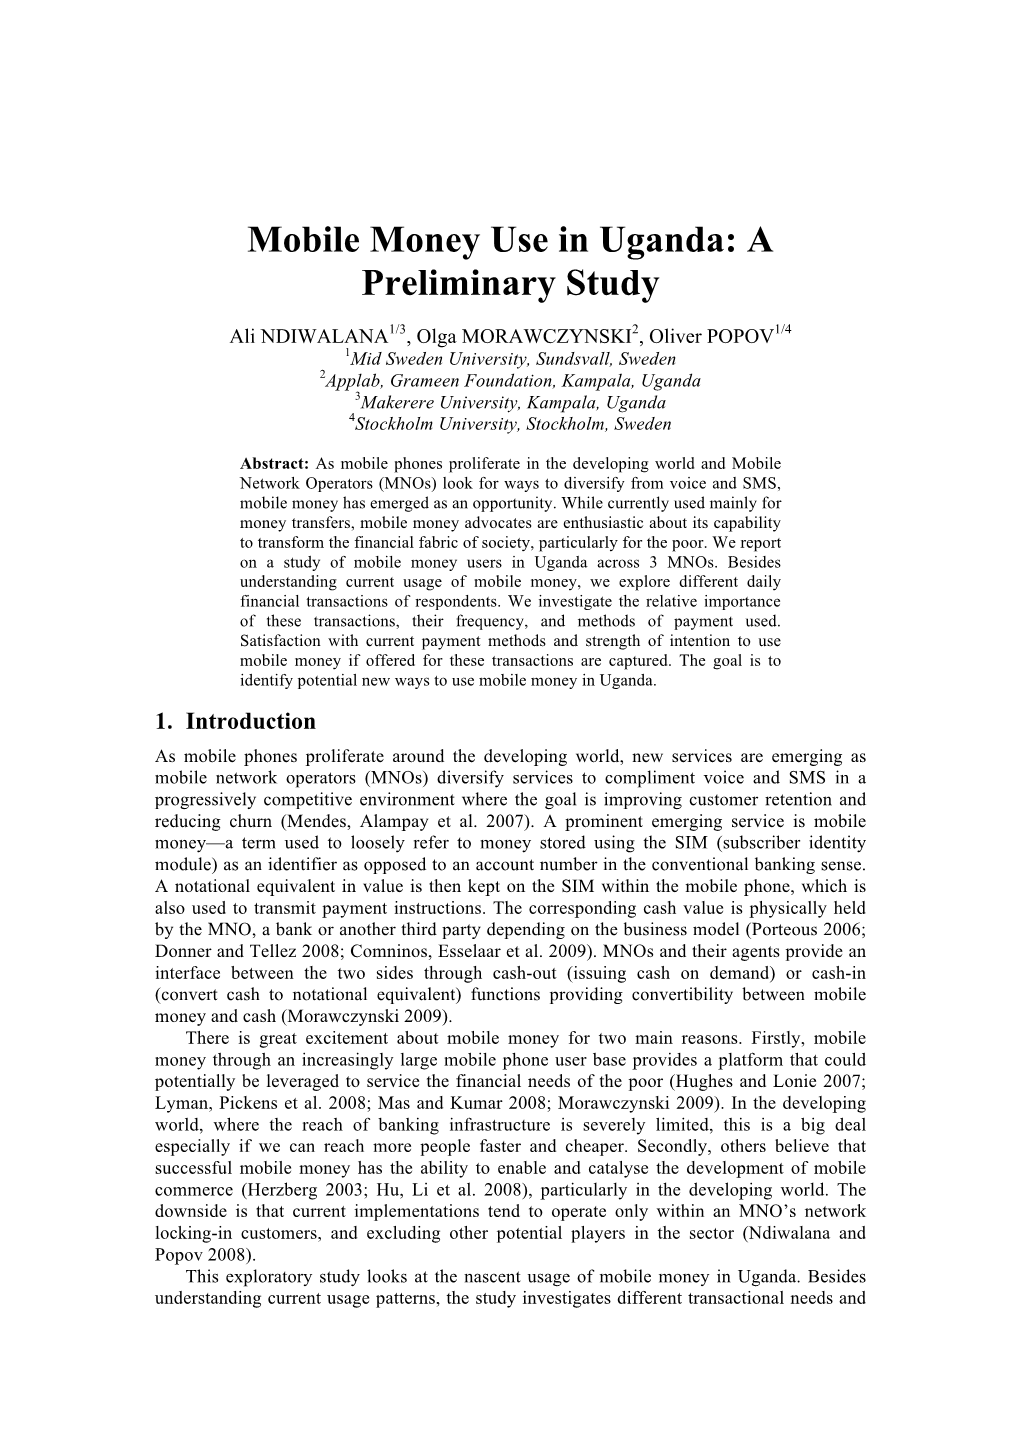 Mobile Money Use in Uganda: a Preliminary Study